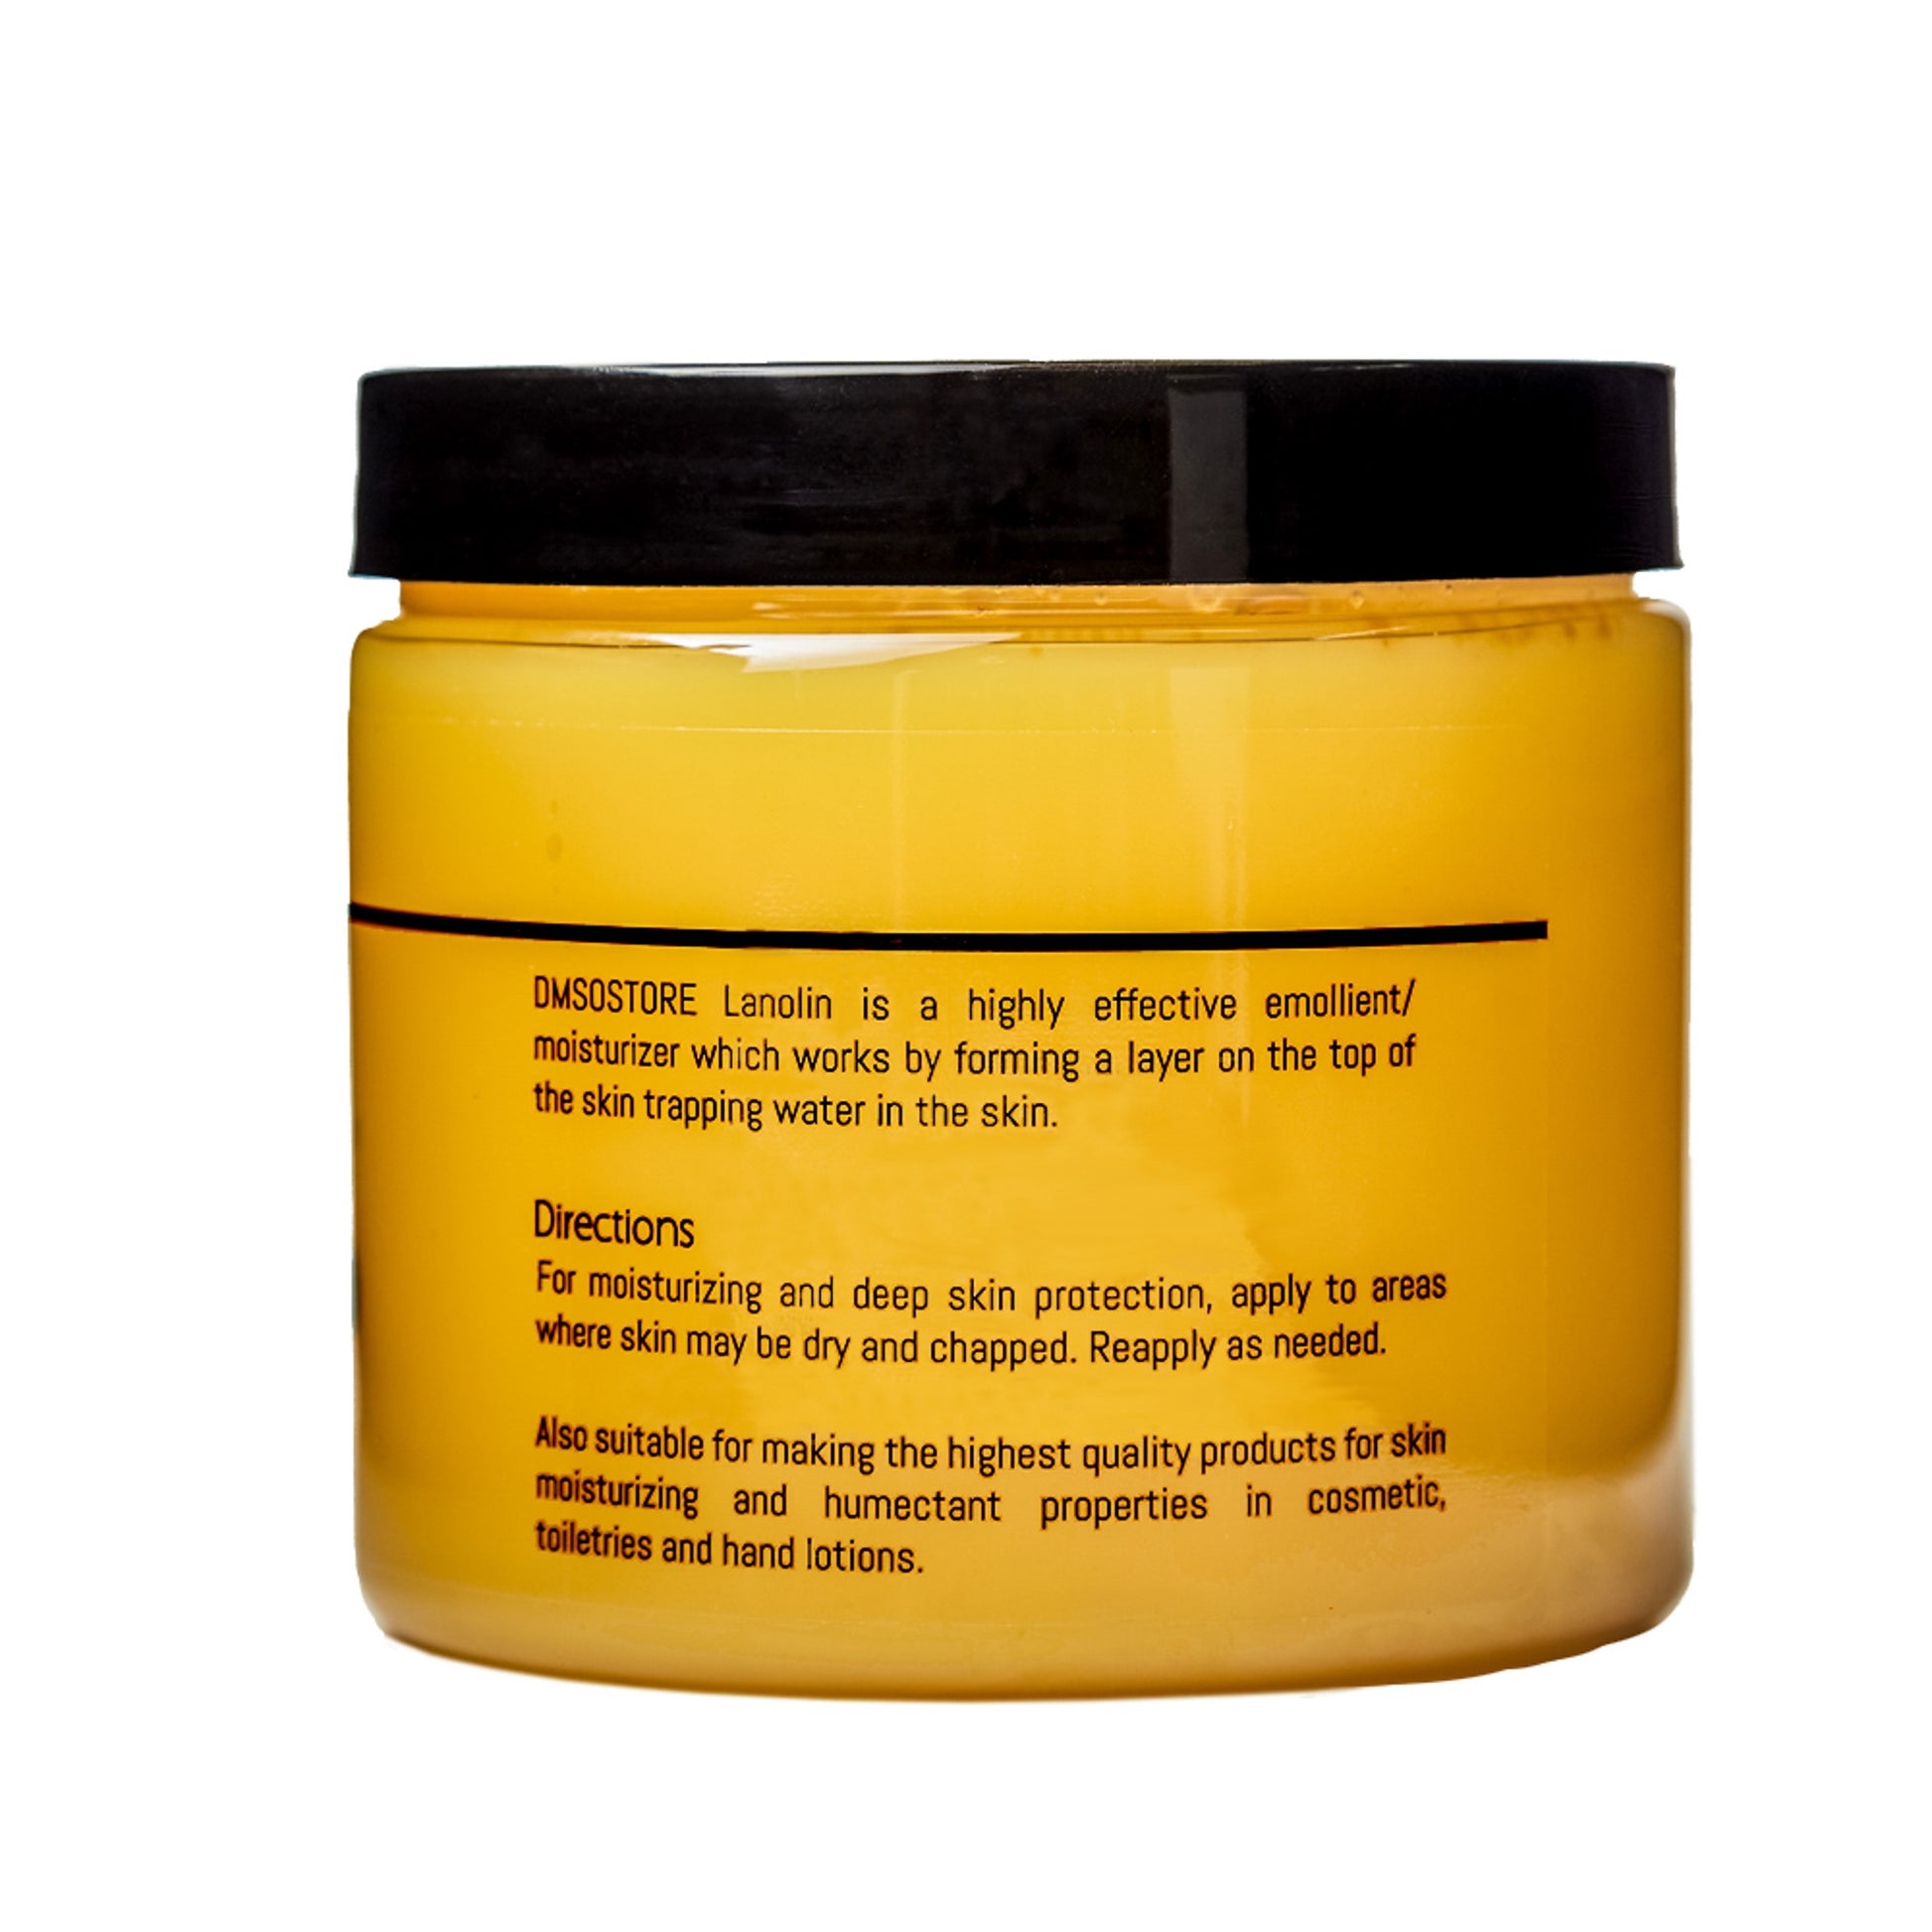 LANOLIN 1 lb. USP Grade Anhydrous 100% Pure Skin Moisturizer - dmsostore